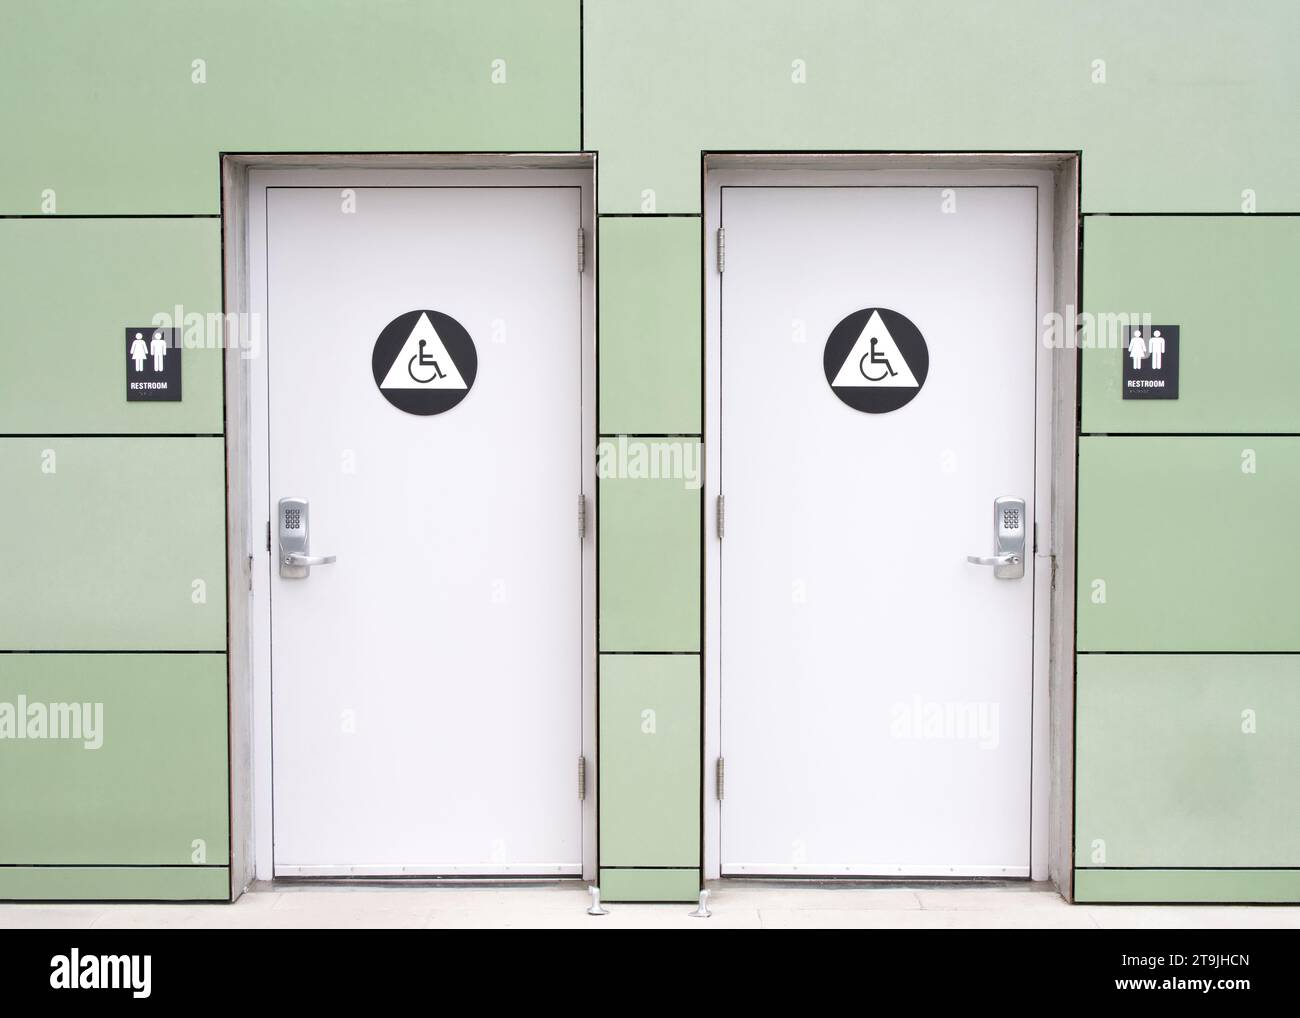 Public bathroom doors on outside building, concrete walkway. Unisex toilets with keypad locks on doors. Stock Photo